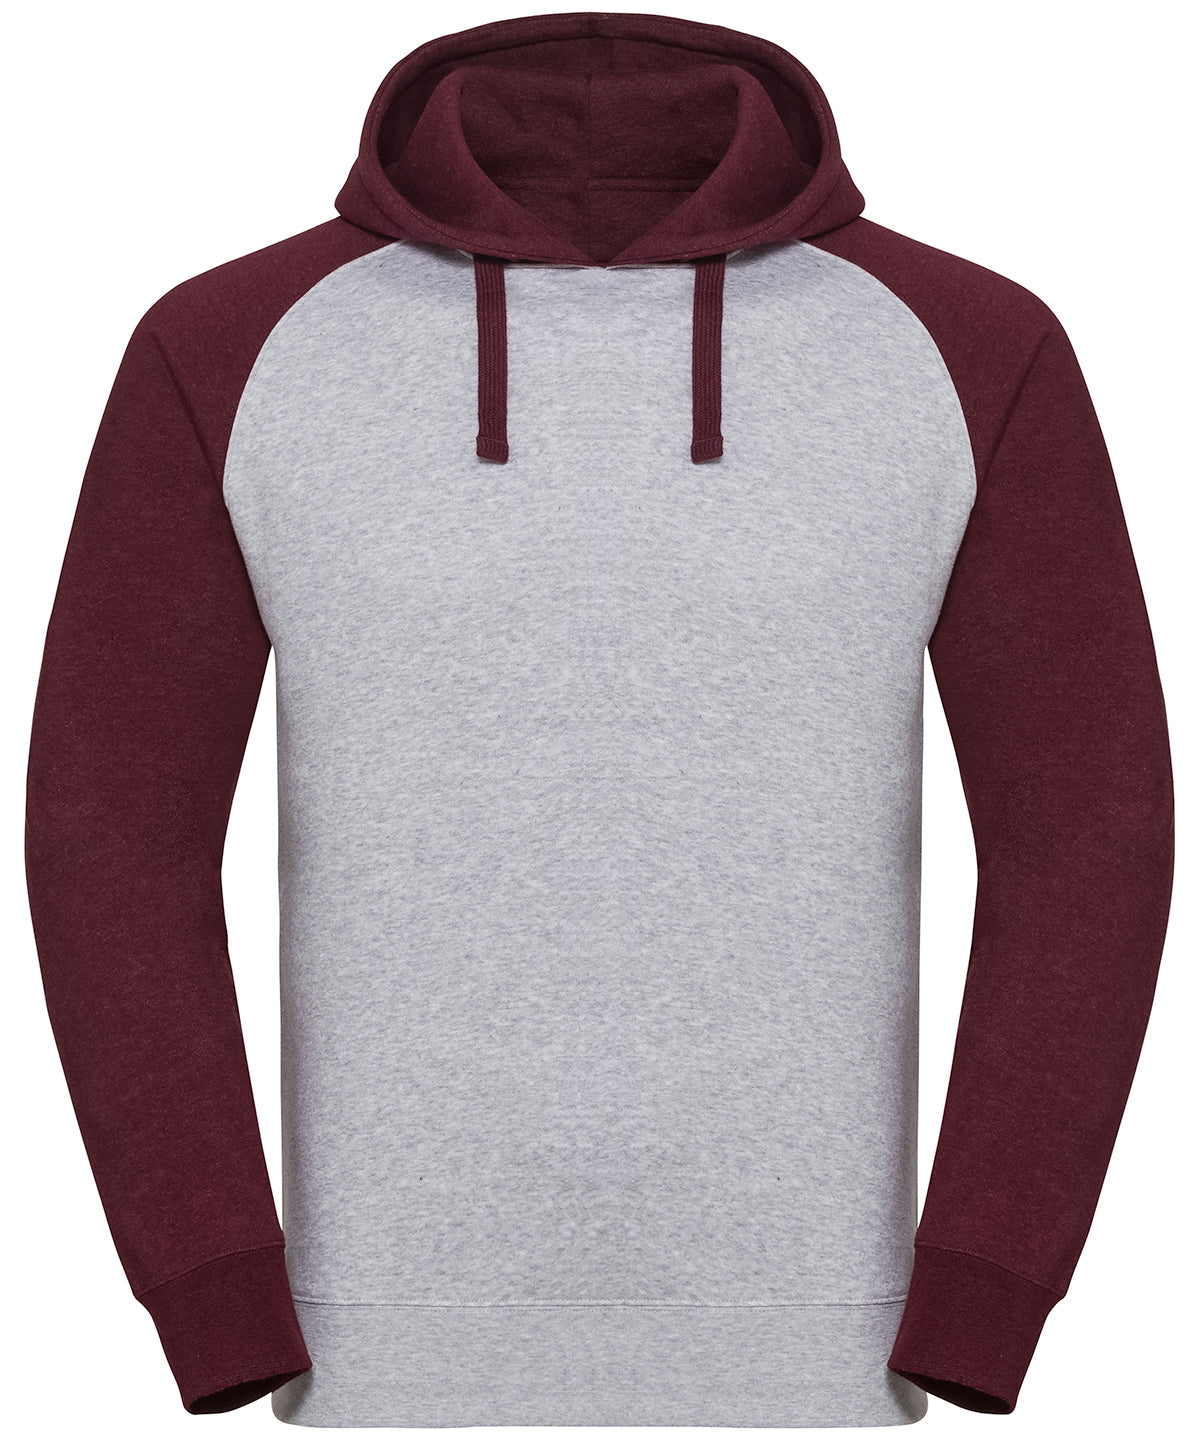 Hettupeysur - Authentic Hooded Baseball Sweatshirt